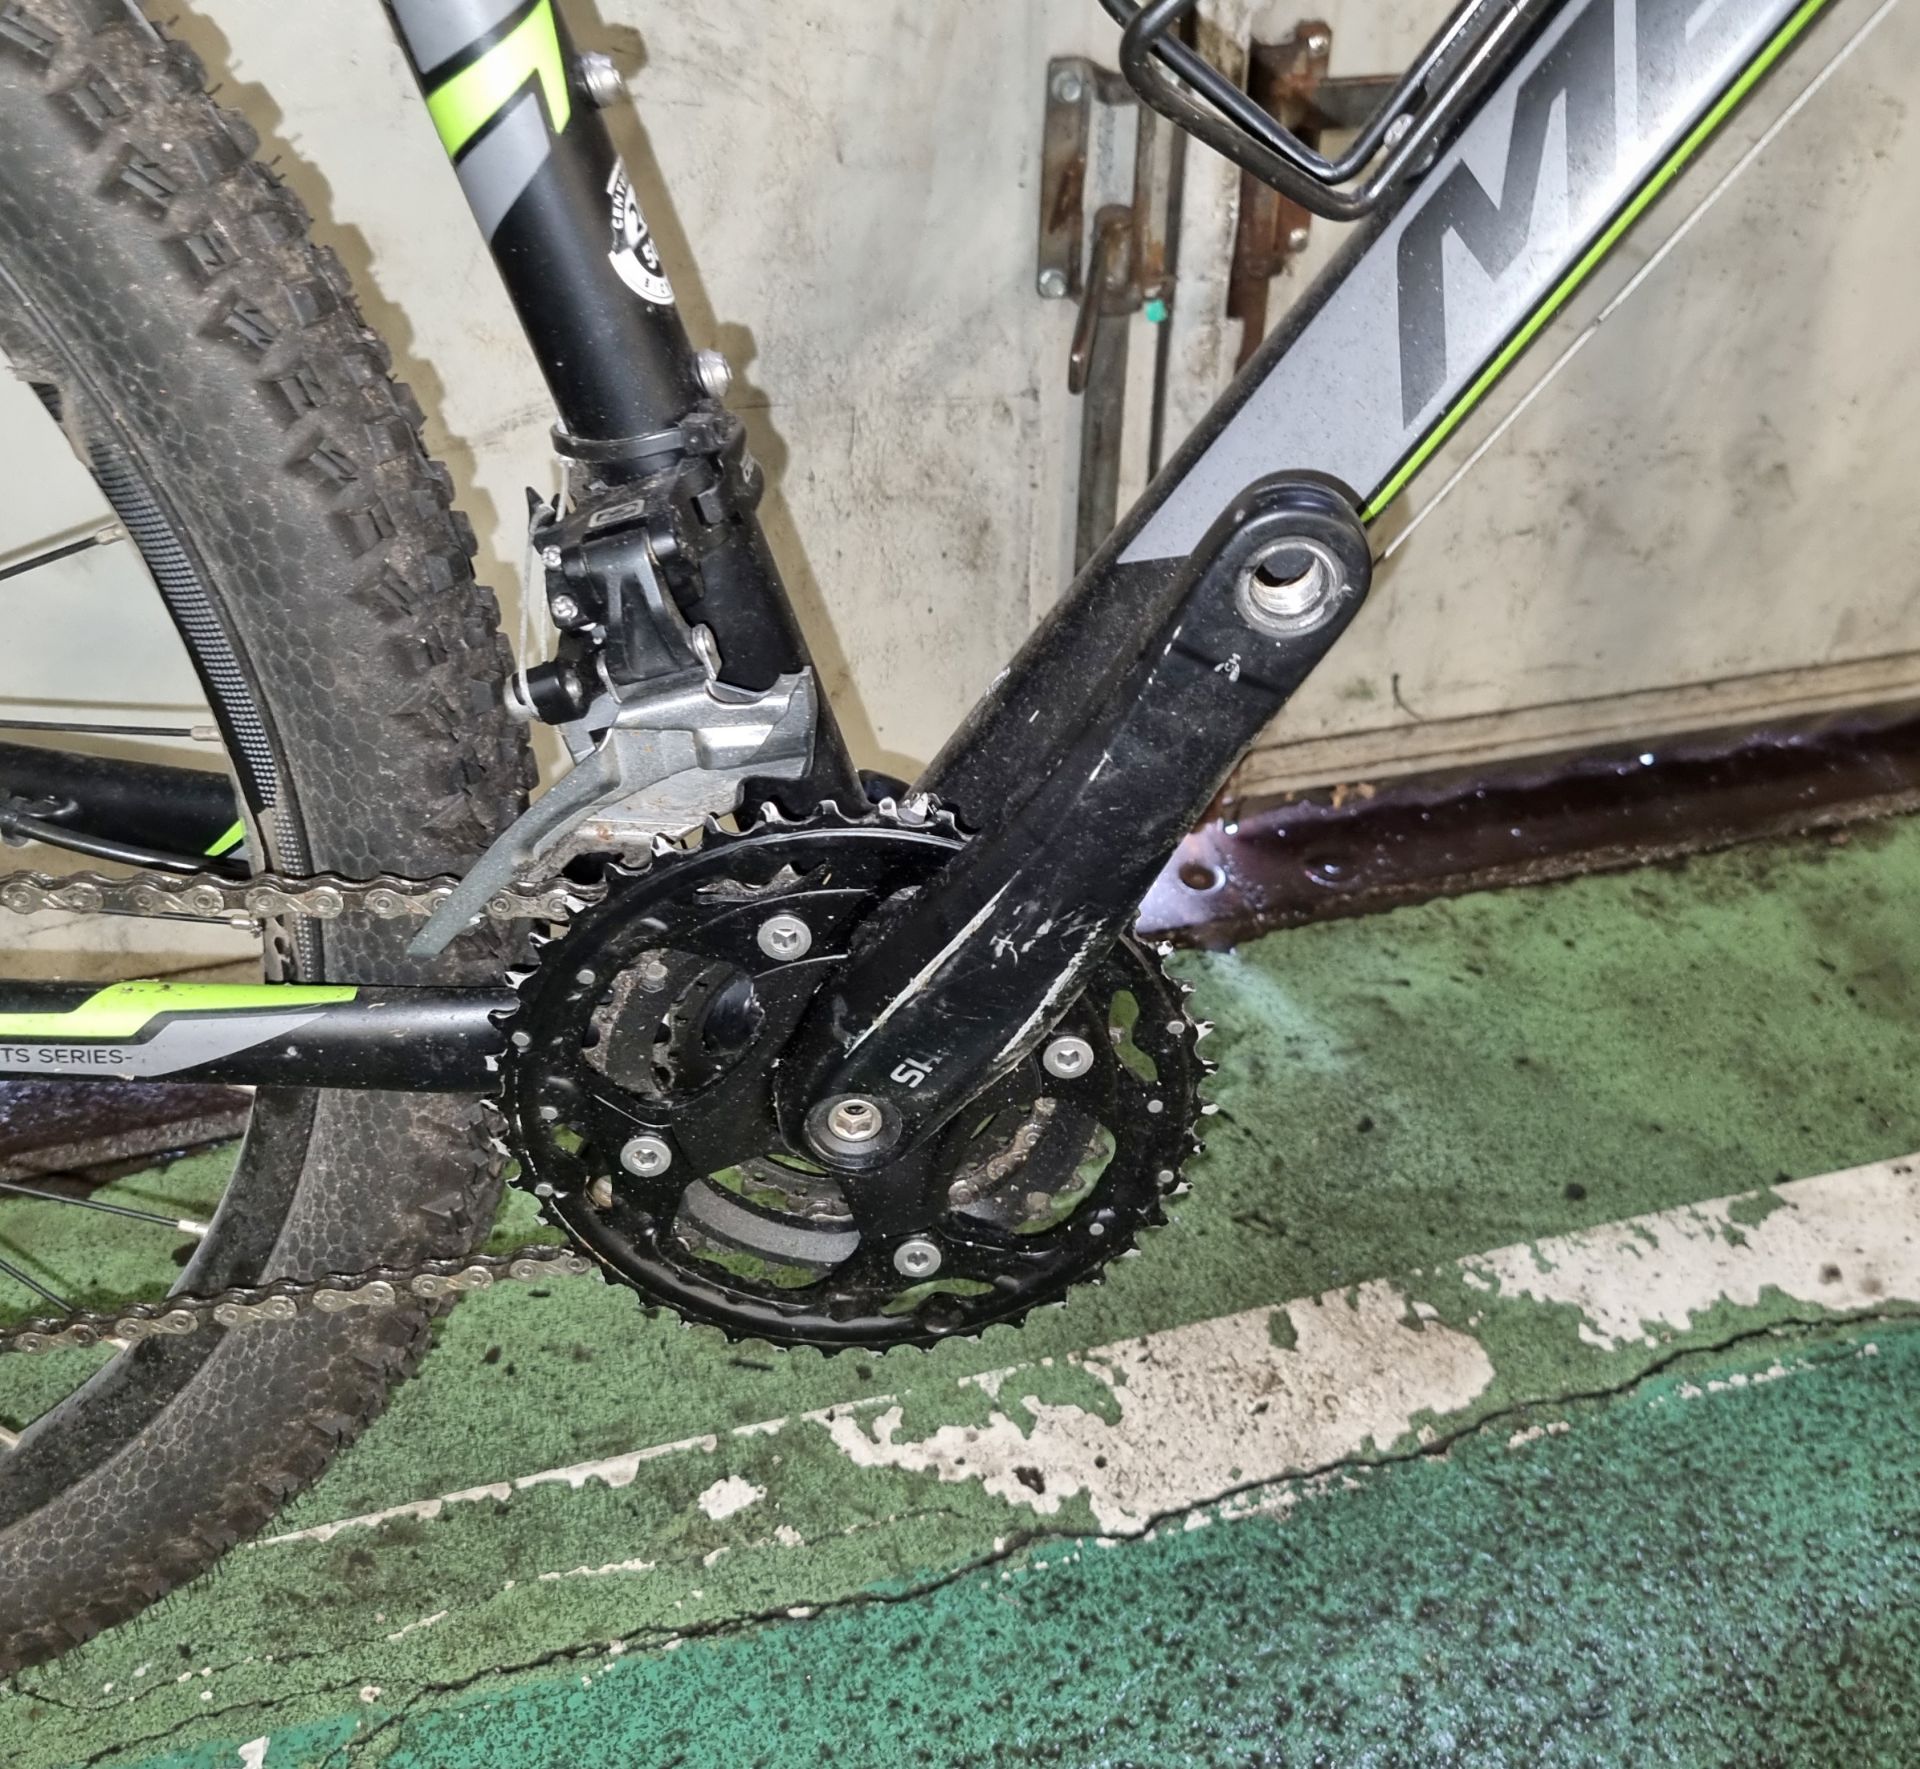 Merida Big Seven hardtail mountain bike - 3x10 Shimano drivetrain - Shimano hydraulic disc brakes - Bild 5 aus 6